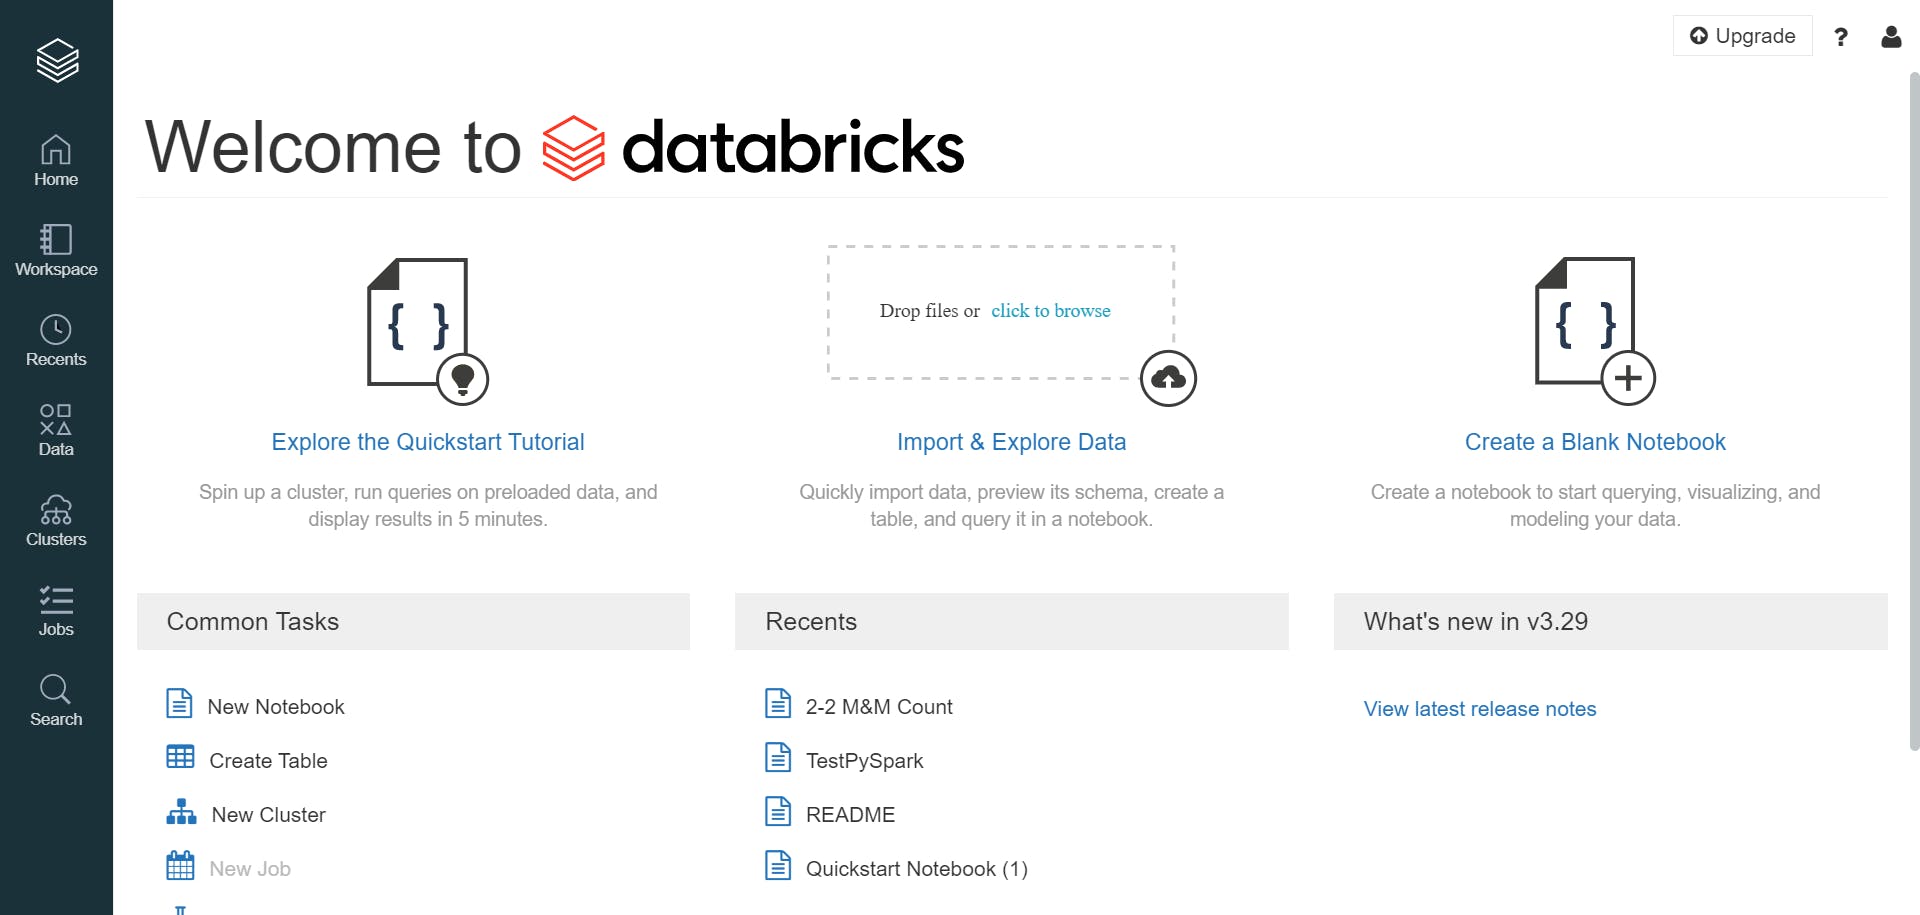 Databricks-Homepage.png